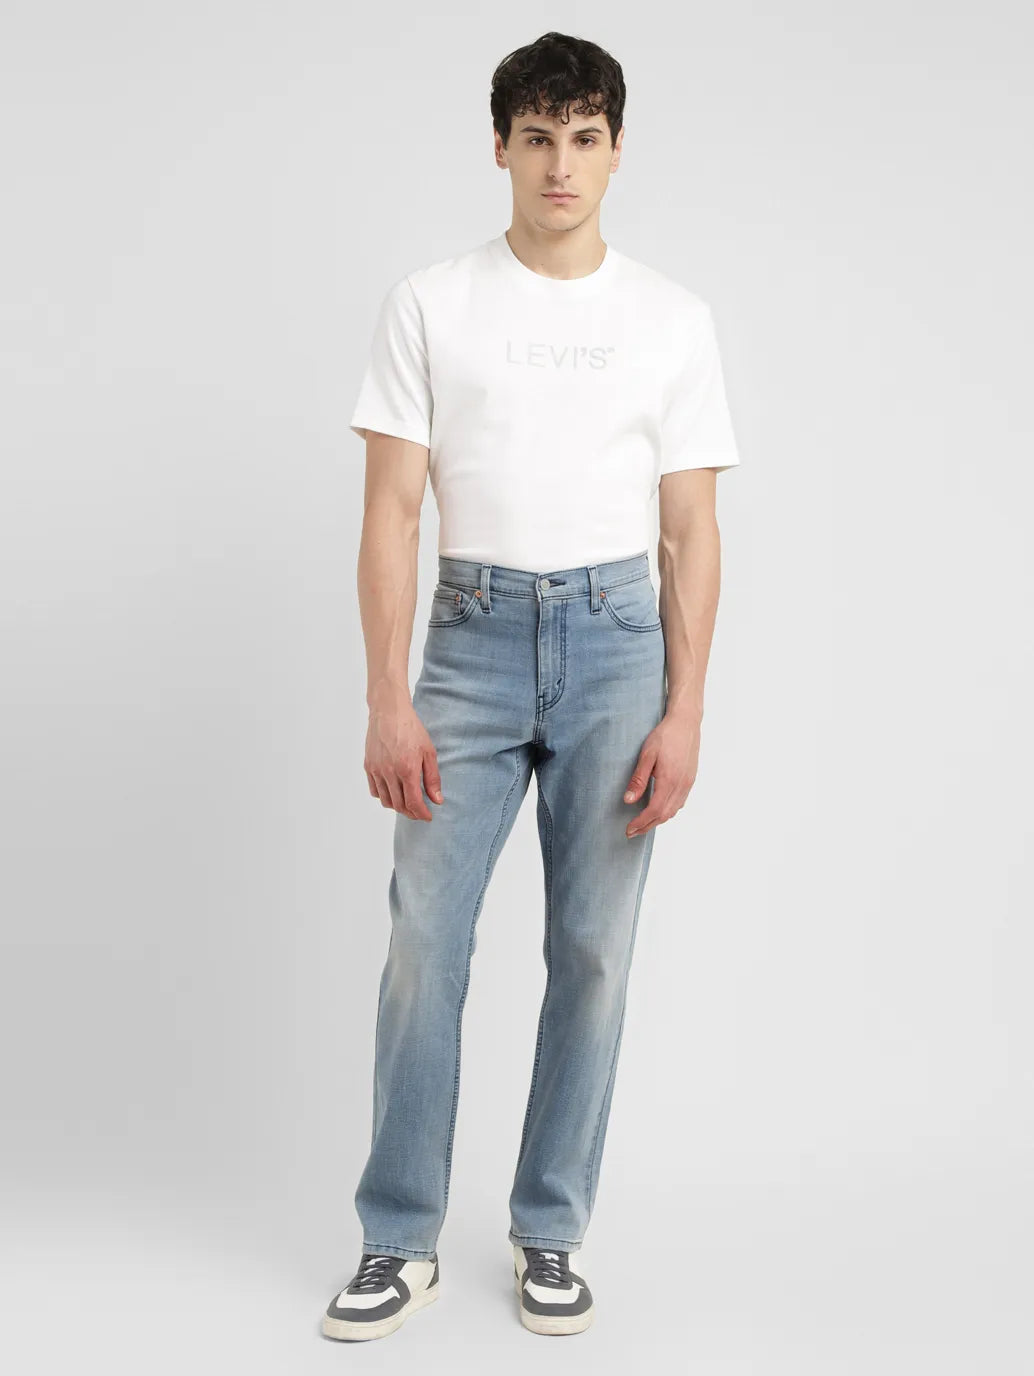 Men's Light Indigo Skinny Taper Jeans